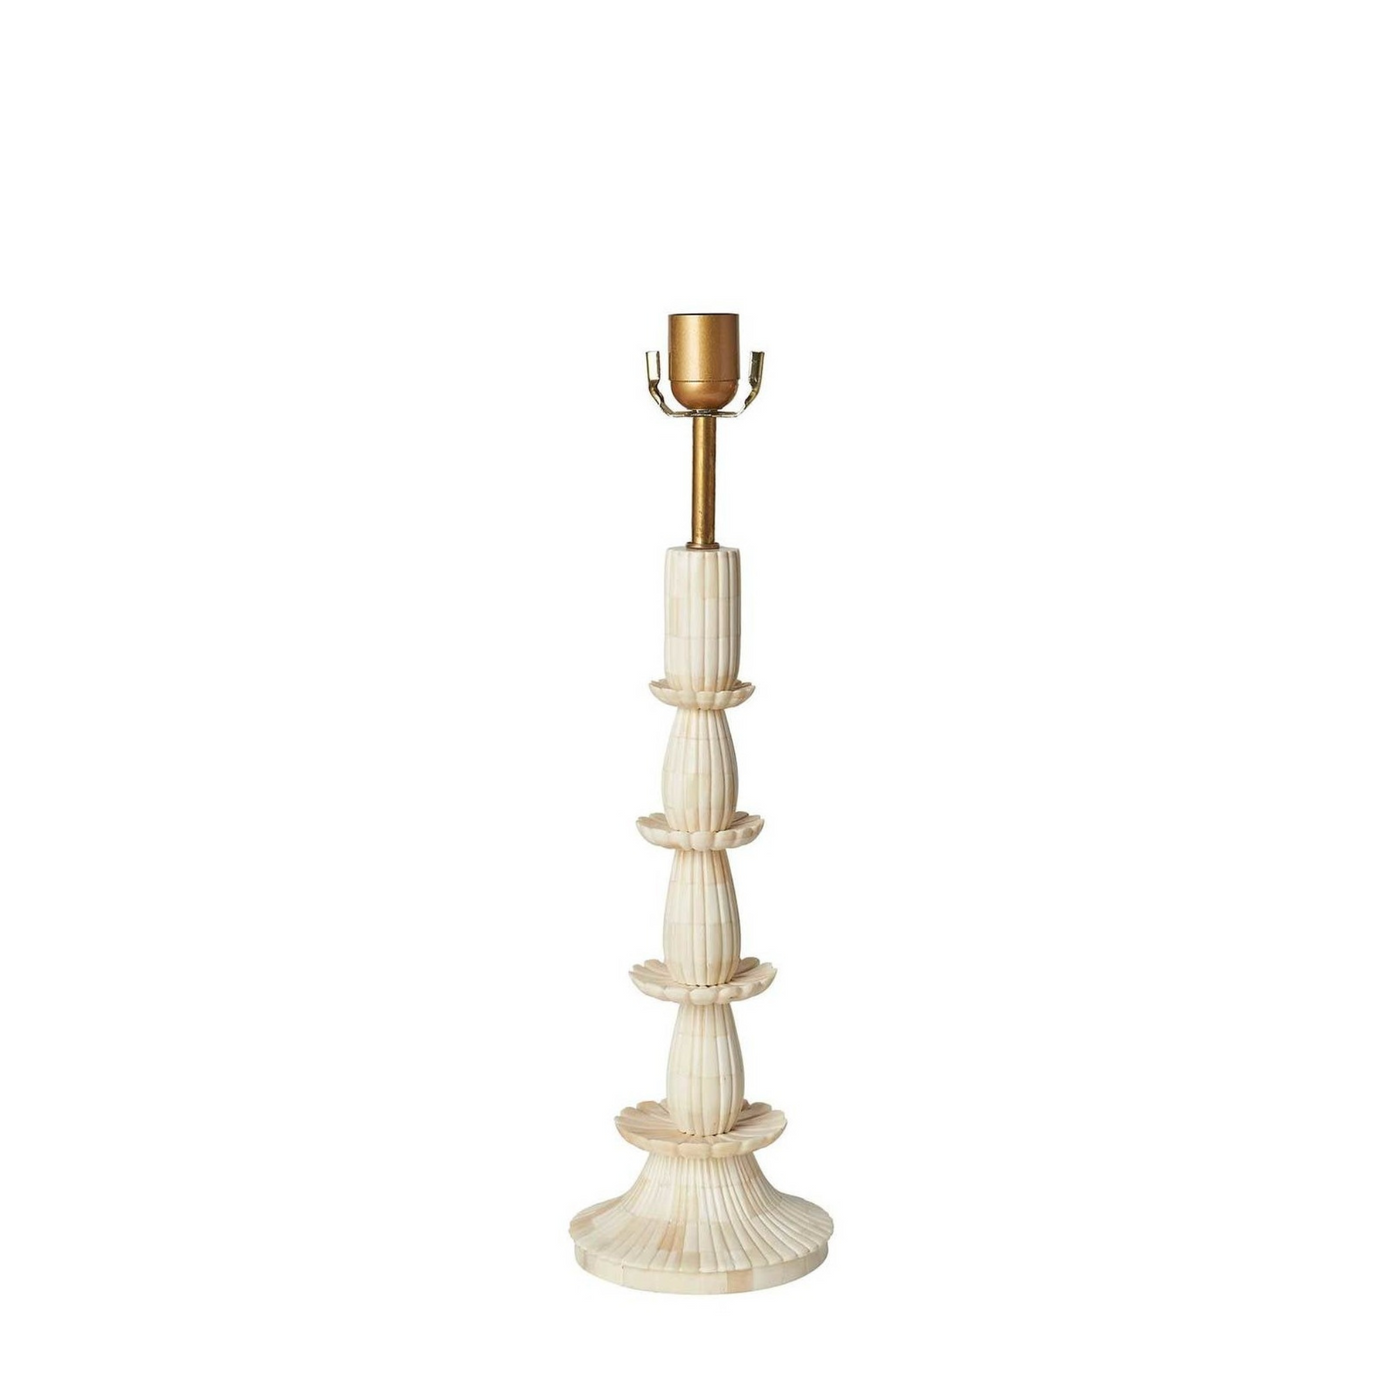 Karni Mata Bone Inlay Table Lamps by Penny Morrison | Newport Lamp And Shade | Located in Newport, RI